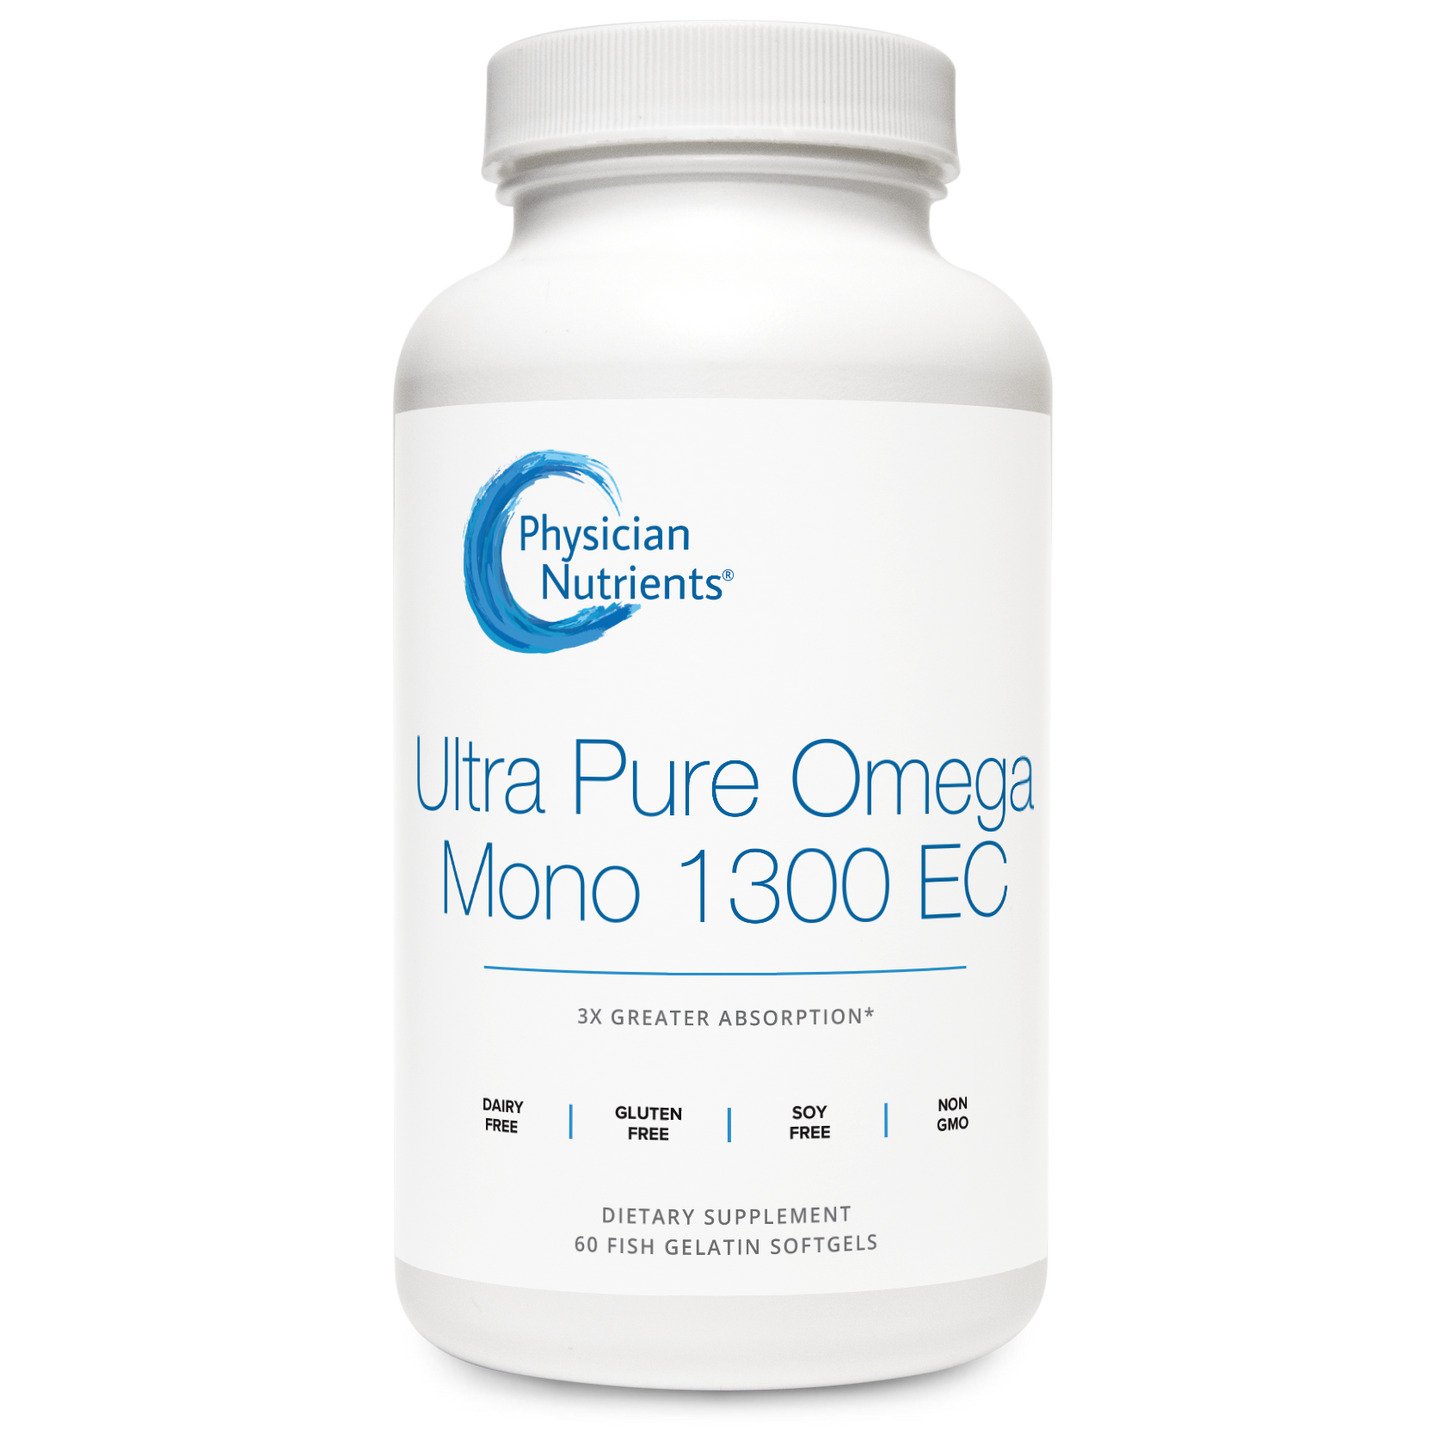 Ultra Pure Omega Mono 1300 EC